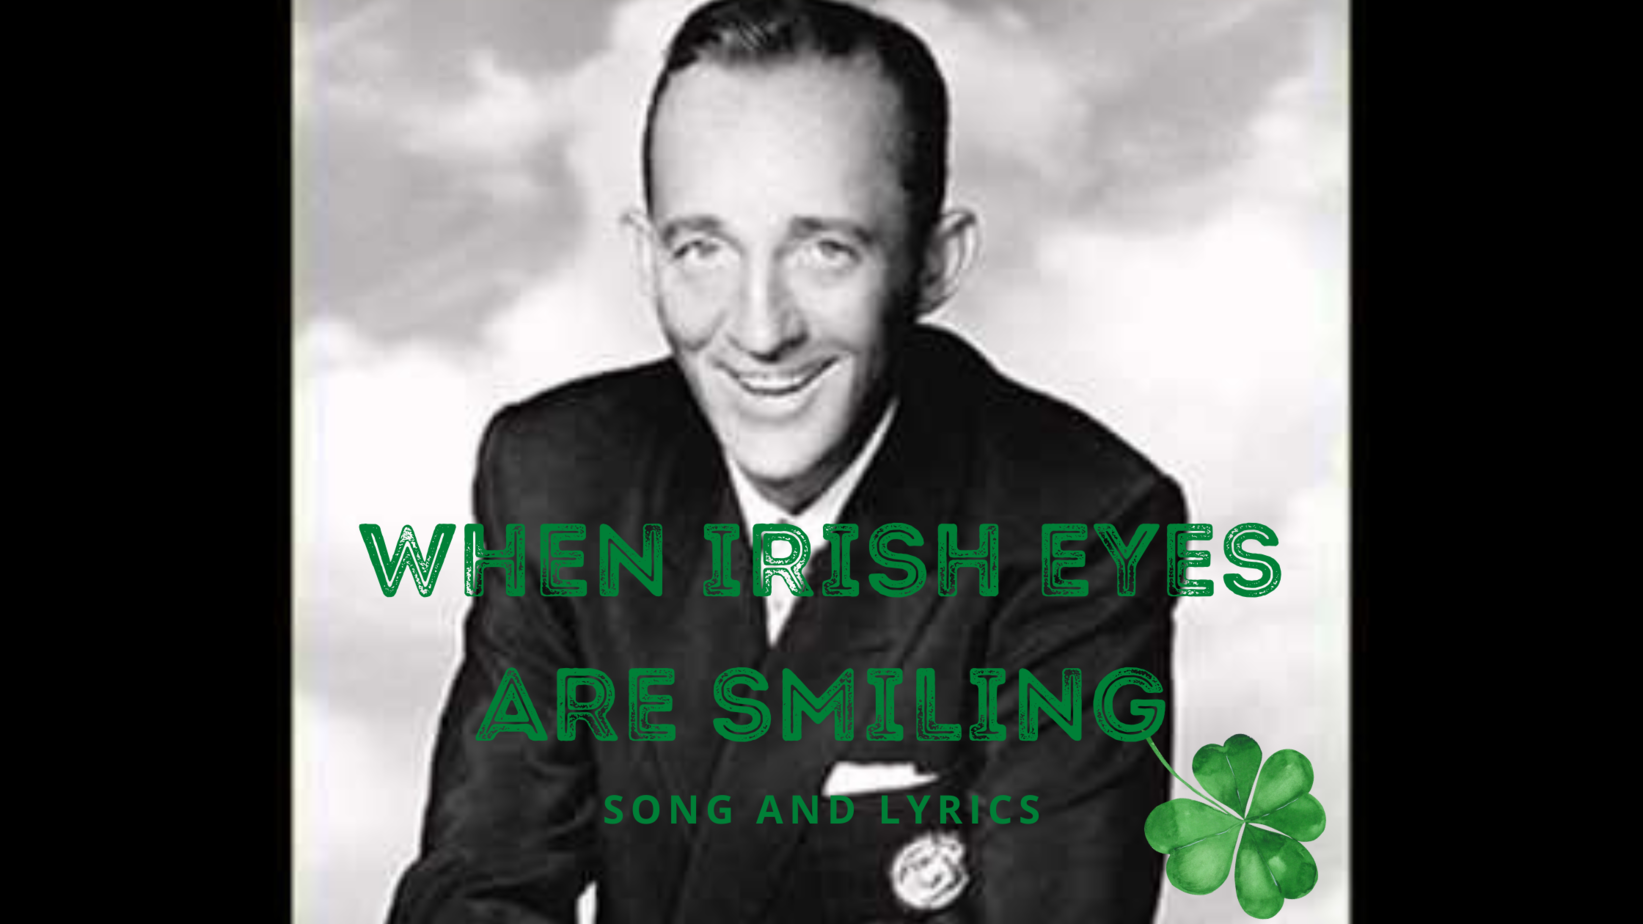 When Irish eyes are smiling song and lyrics